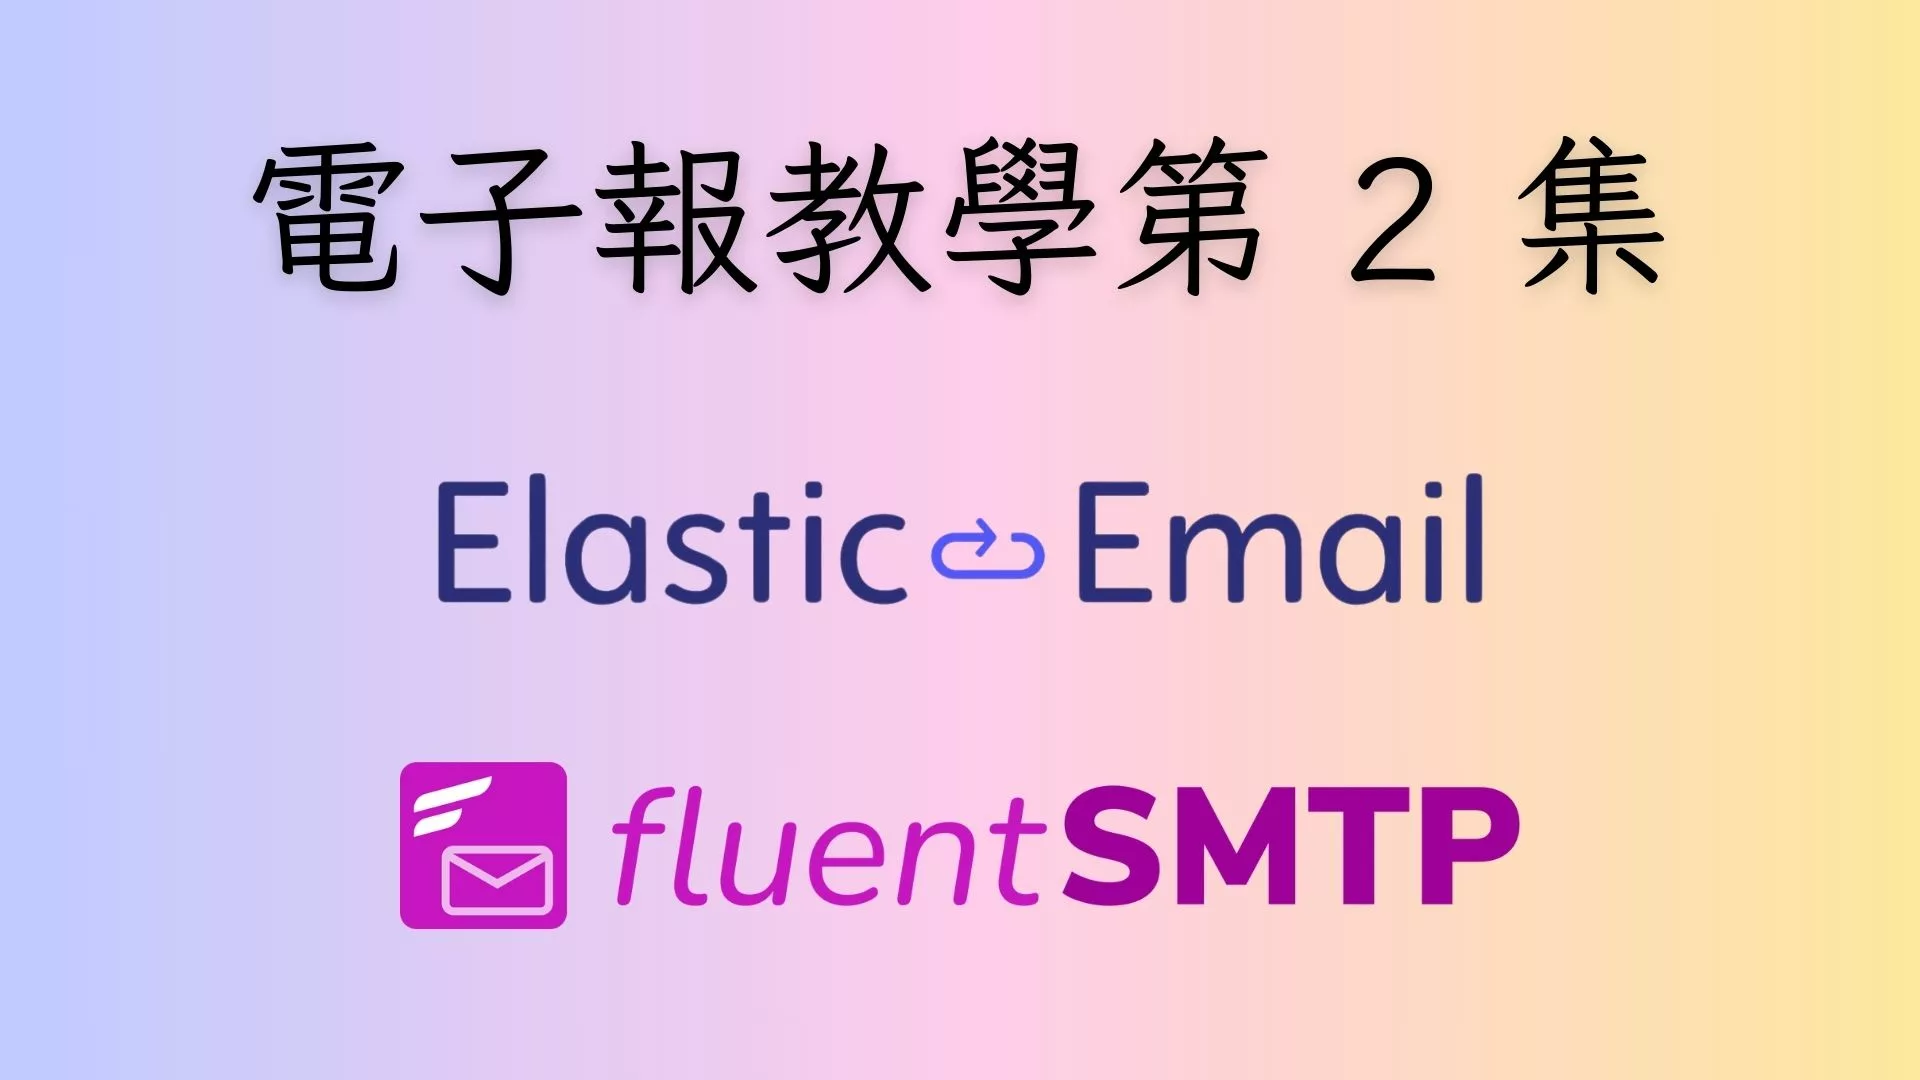 用《Fluent SMTP外掛》和《Cloudways Elastic Email Add-on》順利寄出每封信。電子報教學系列第2集 edm course 2 fluent smtp cover 1 jpg